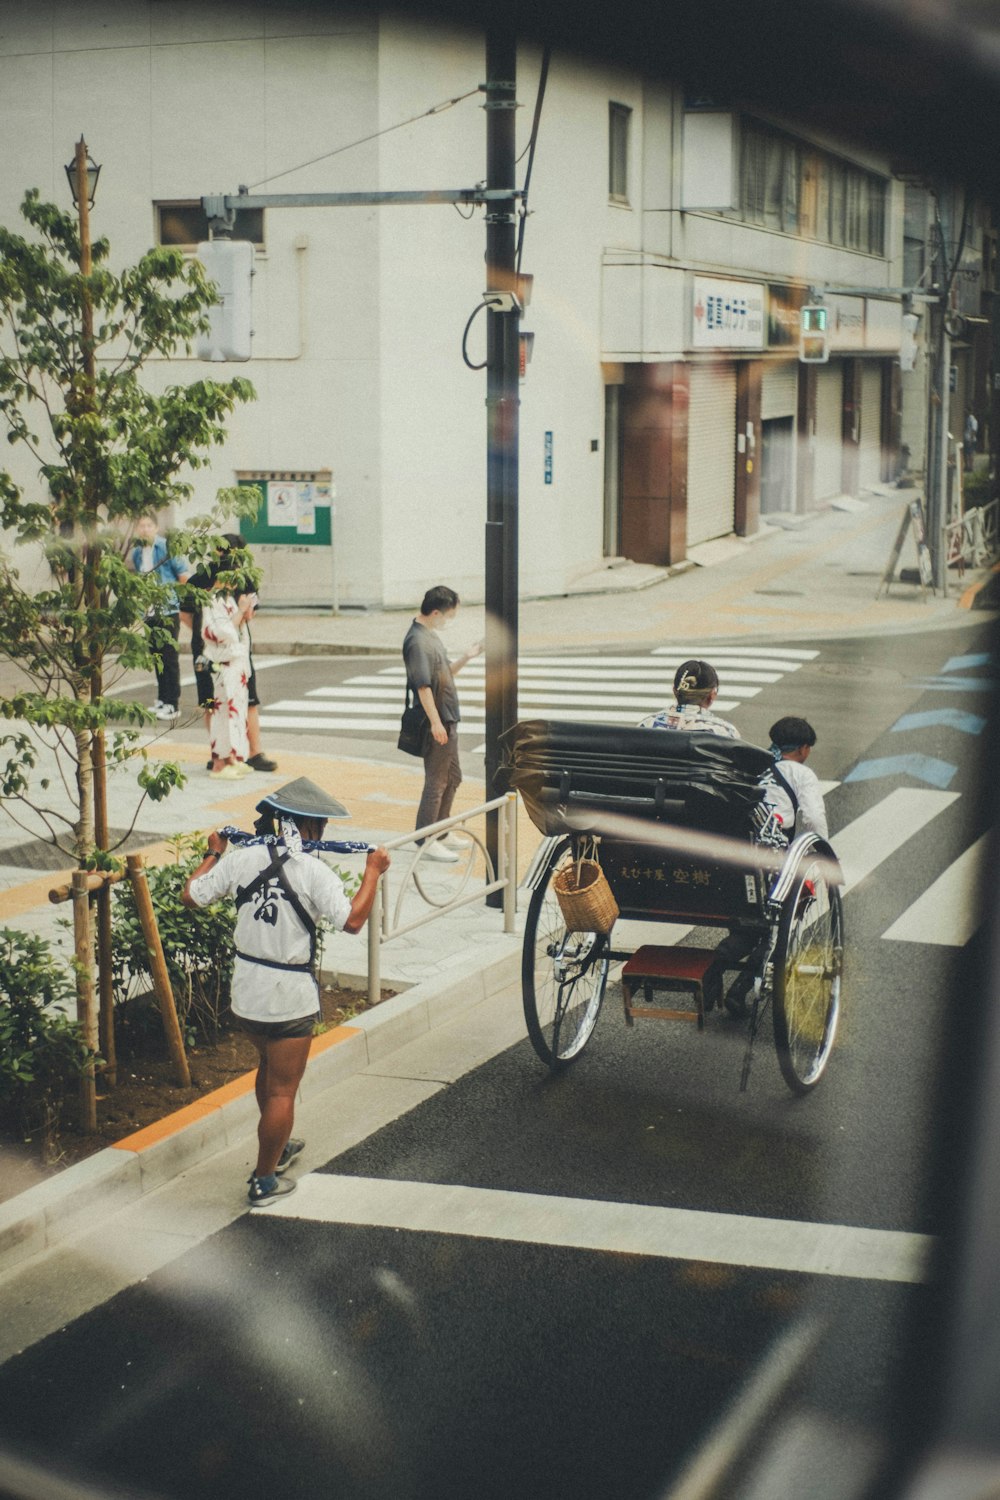 a person riding a horse drawn carriage down a street